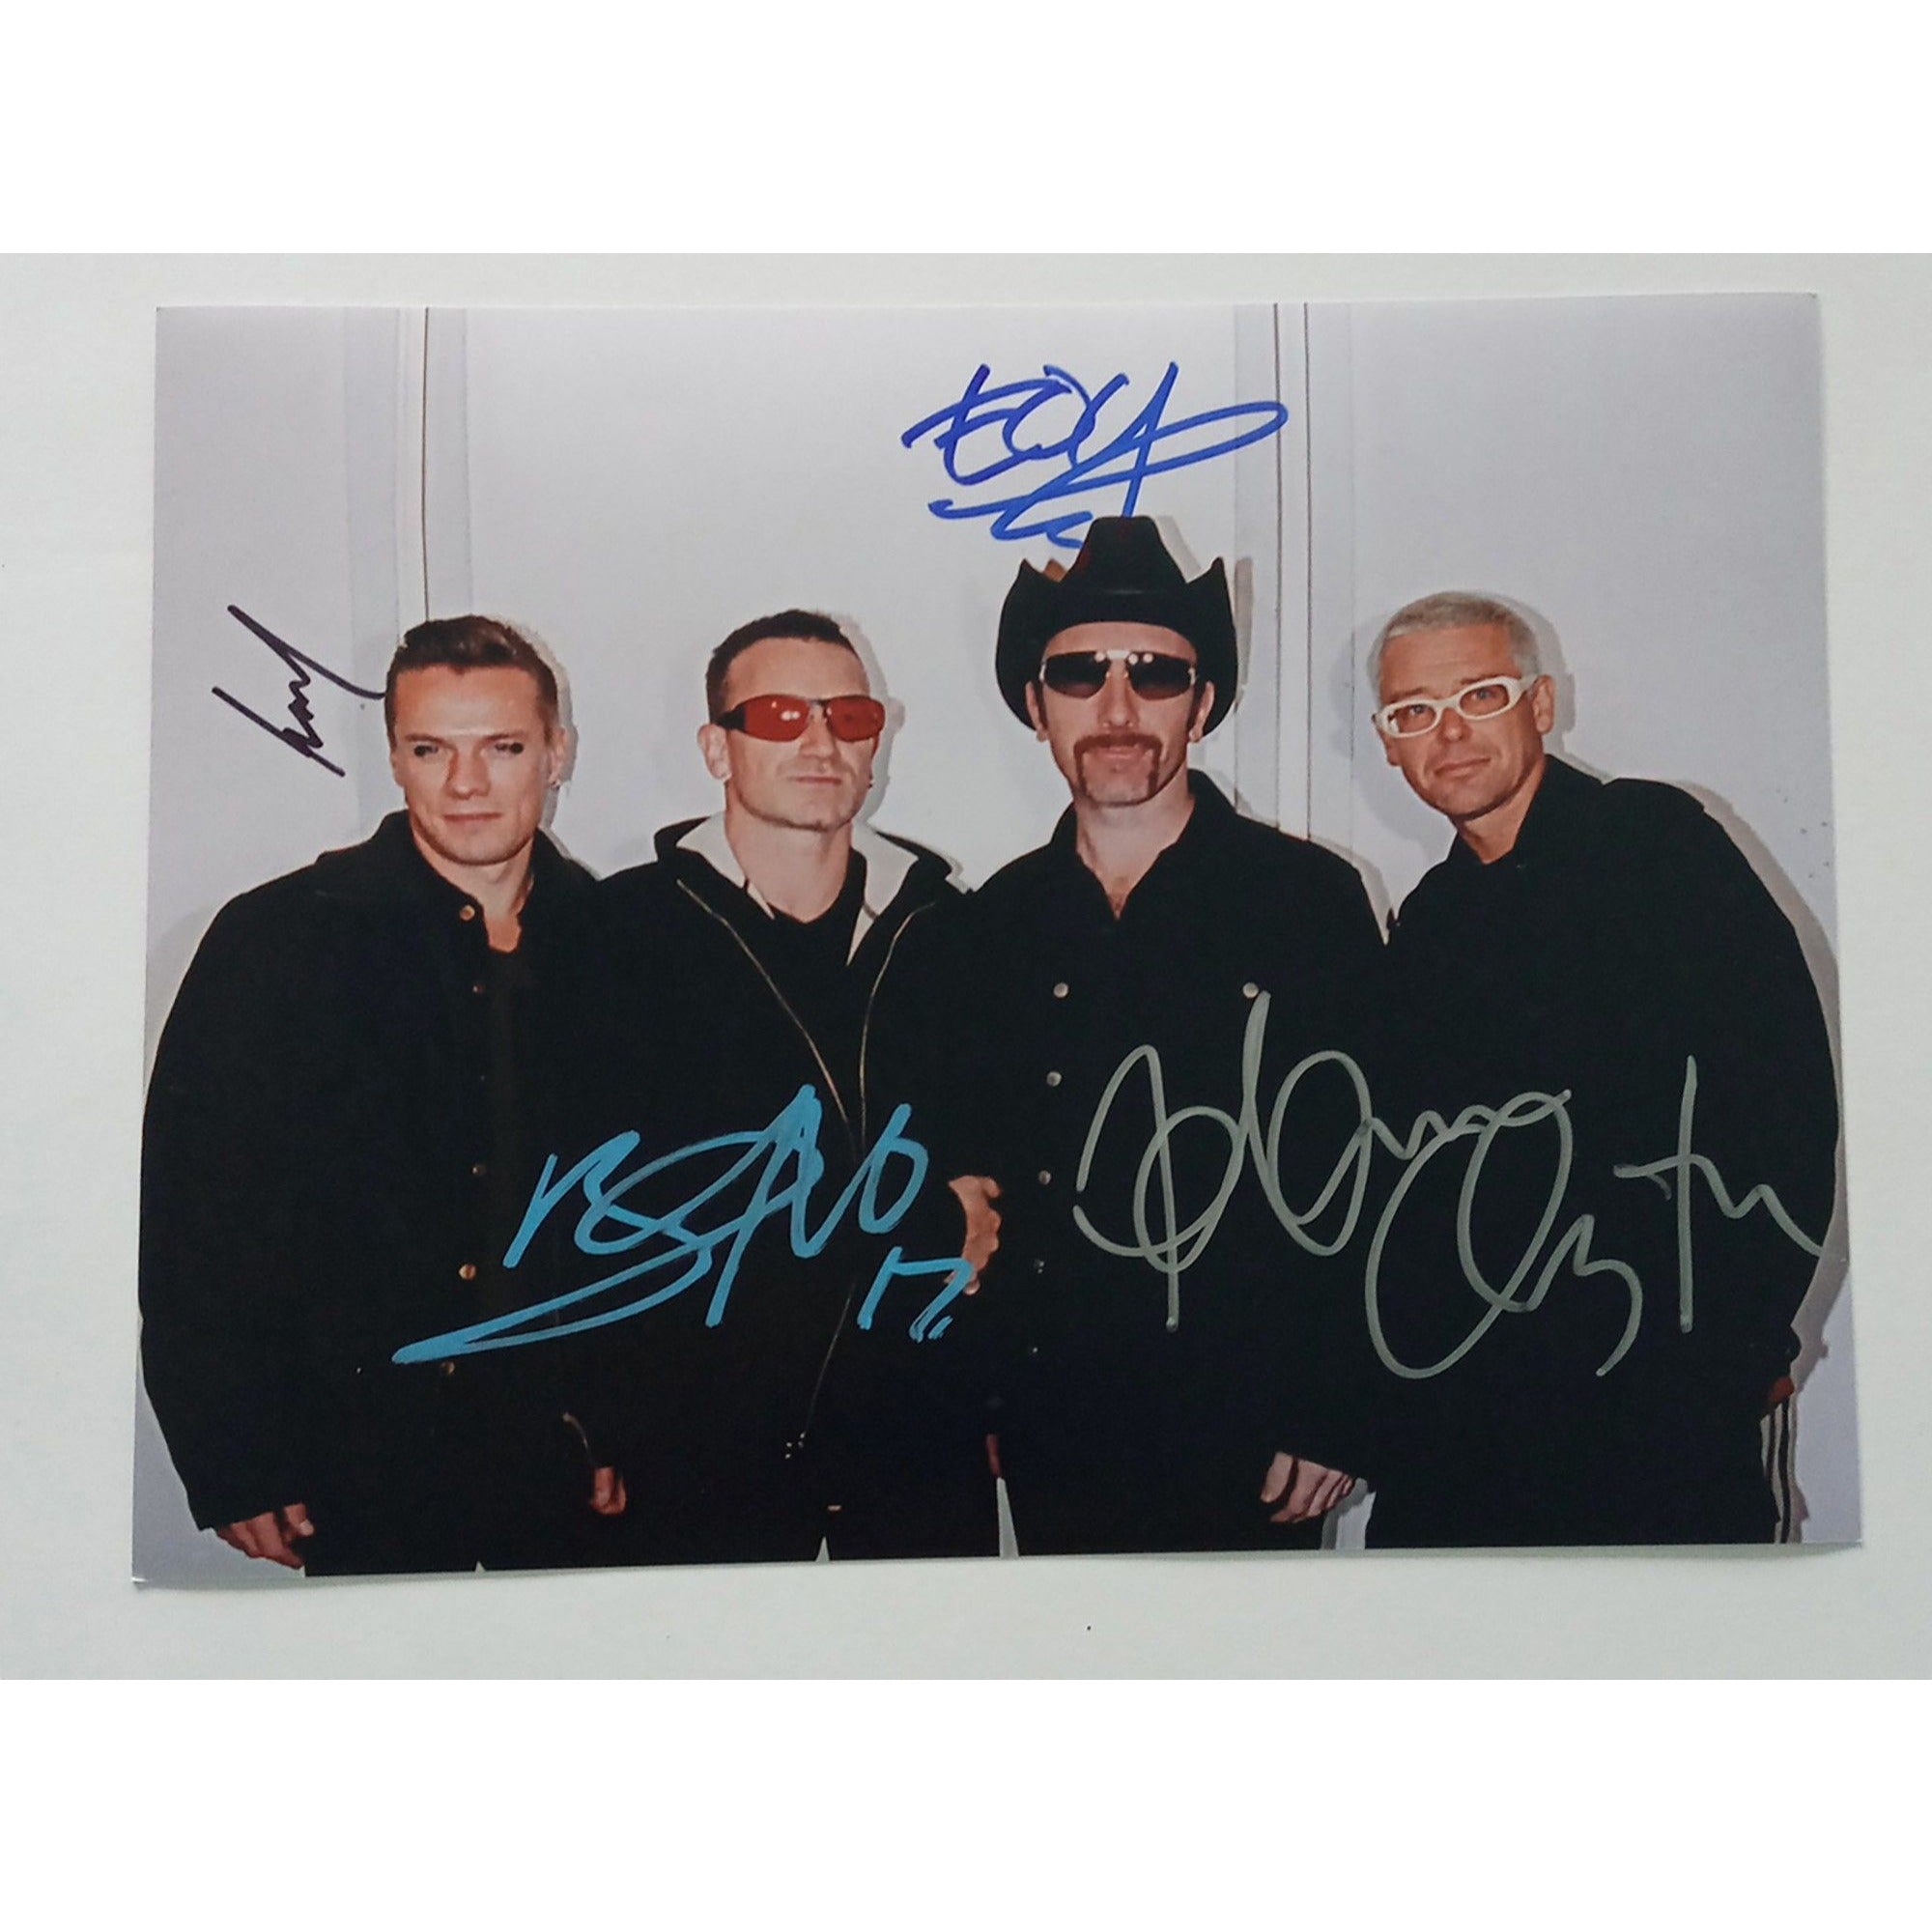 Paul Hewson "Bono", "The Edge" David Howell Evans, Adam Clayton, Larry Mullen, 8x10 signed photo